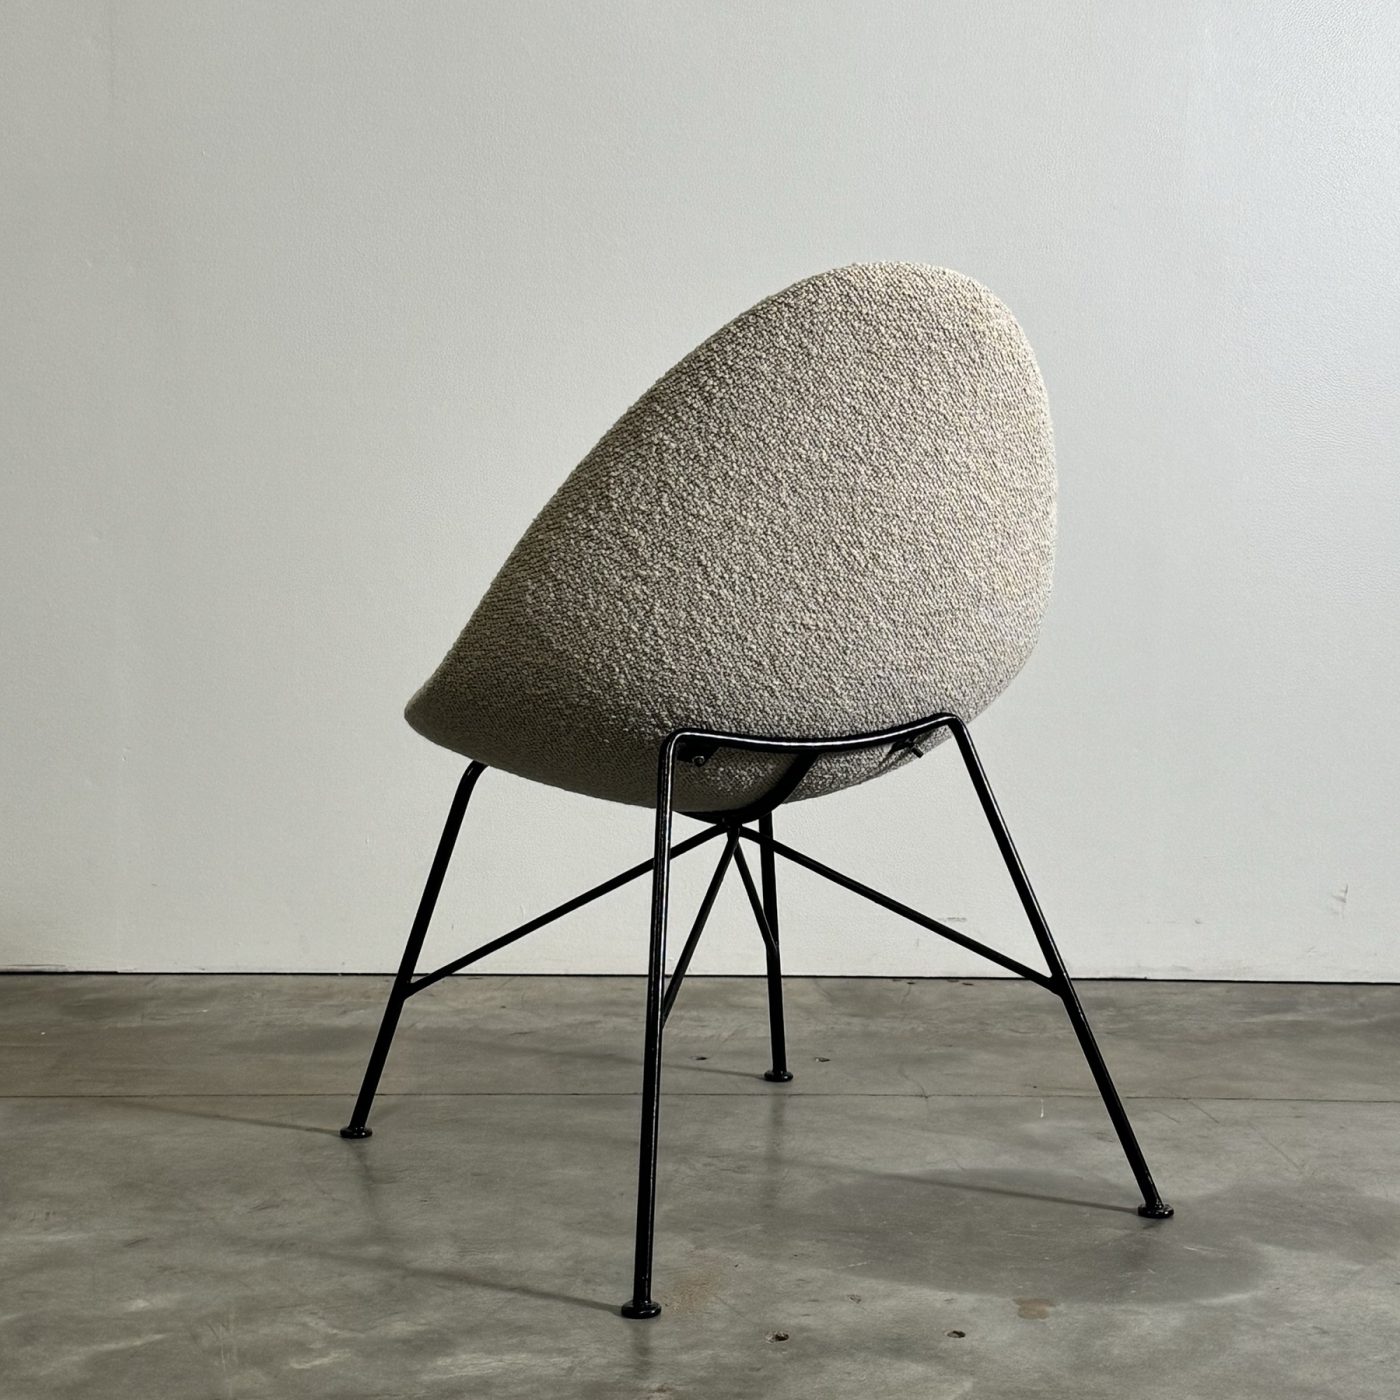 objet-vagabond-midcentury-chairs0000